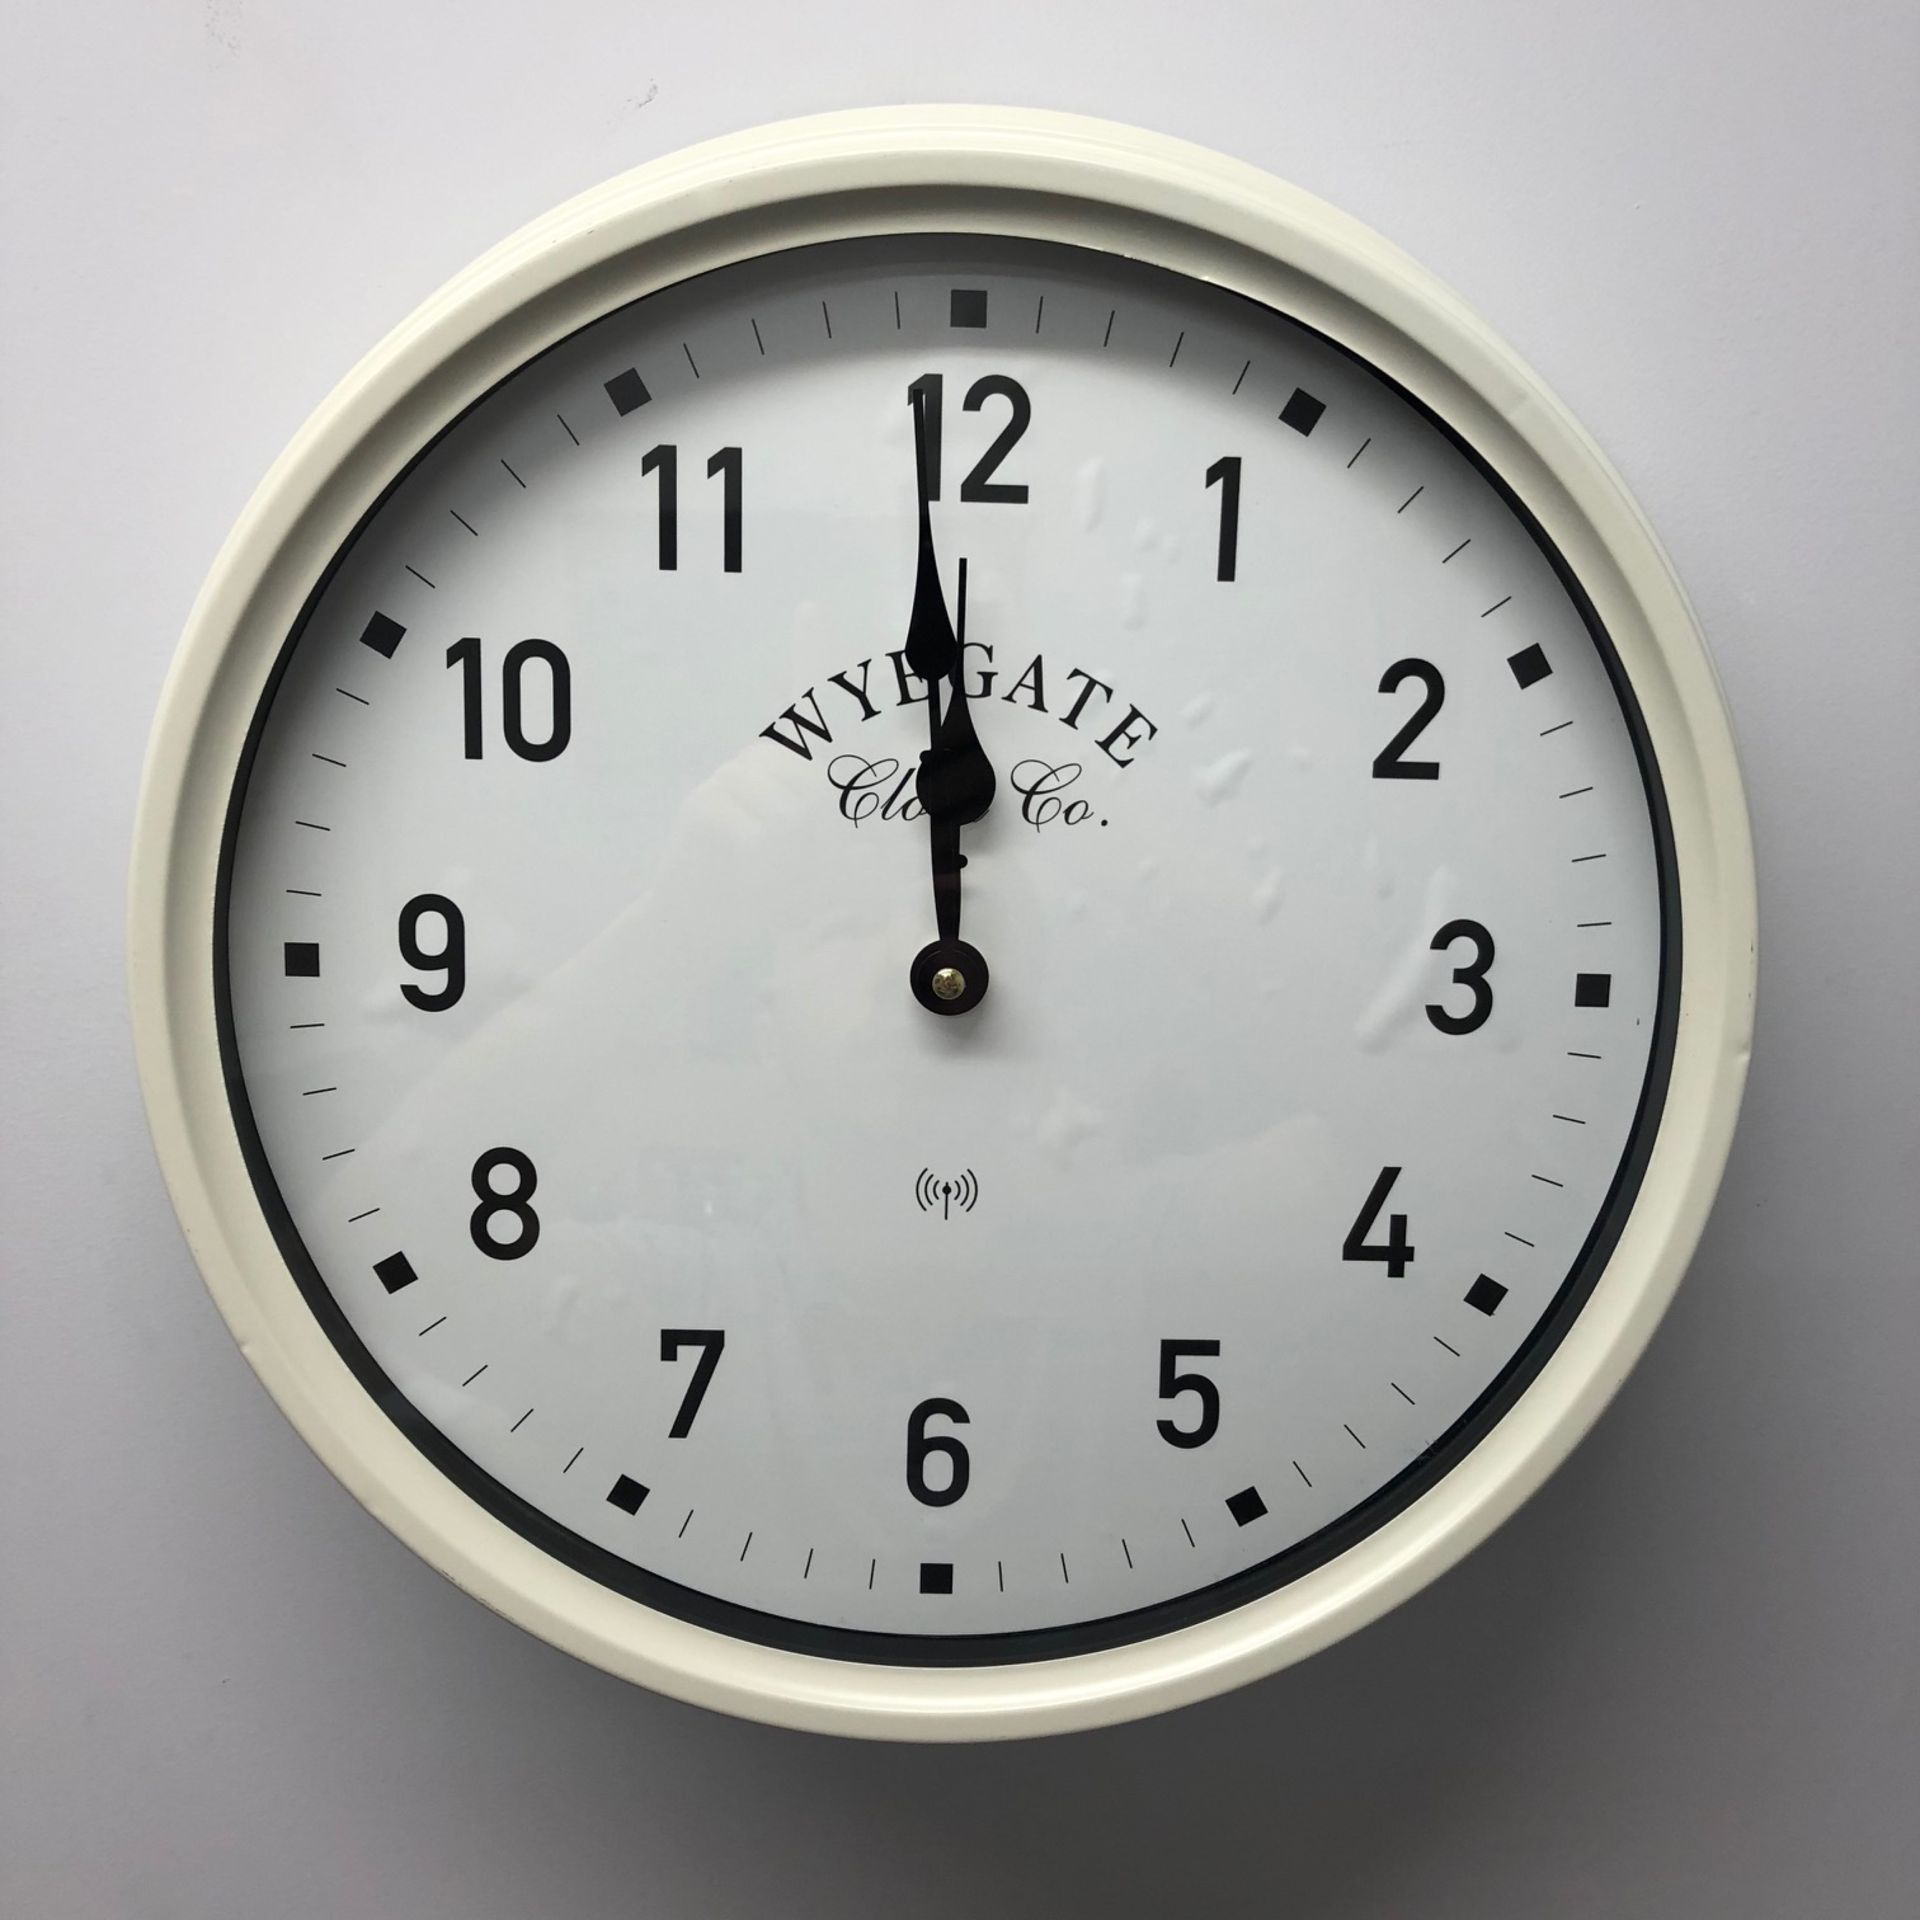 V Brand New Big Wyegate Garden/Indoor Clock (Radio Controlled) - 39cm - Cream - RRP £24.99 - - Image 3 of 3